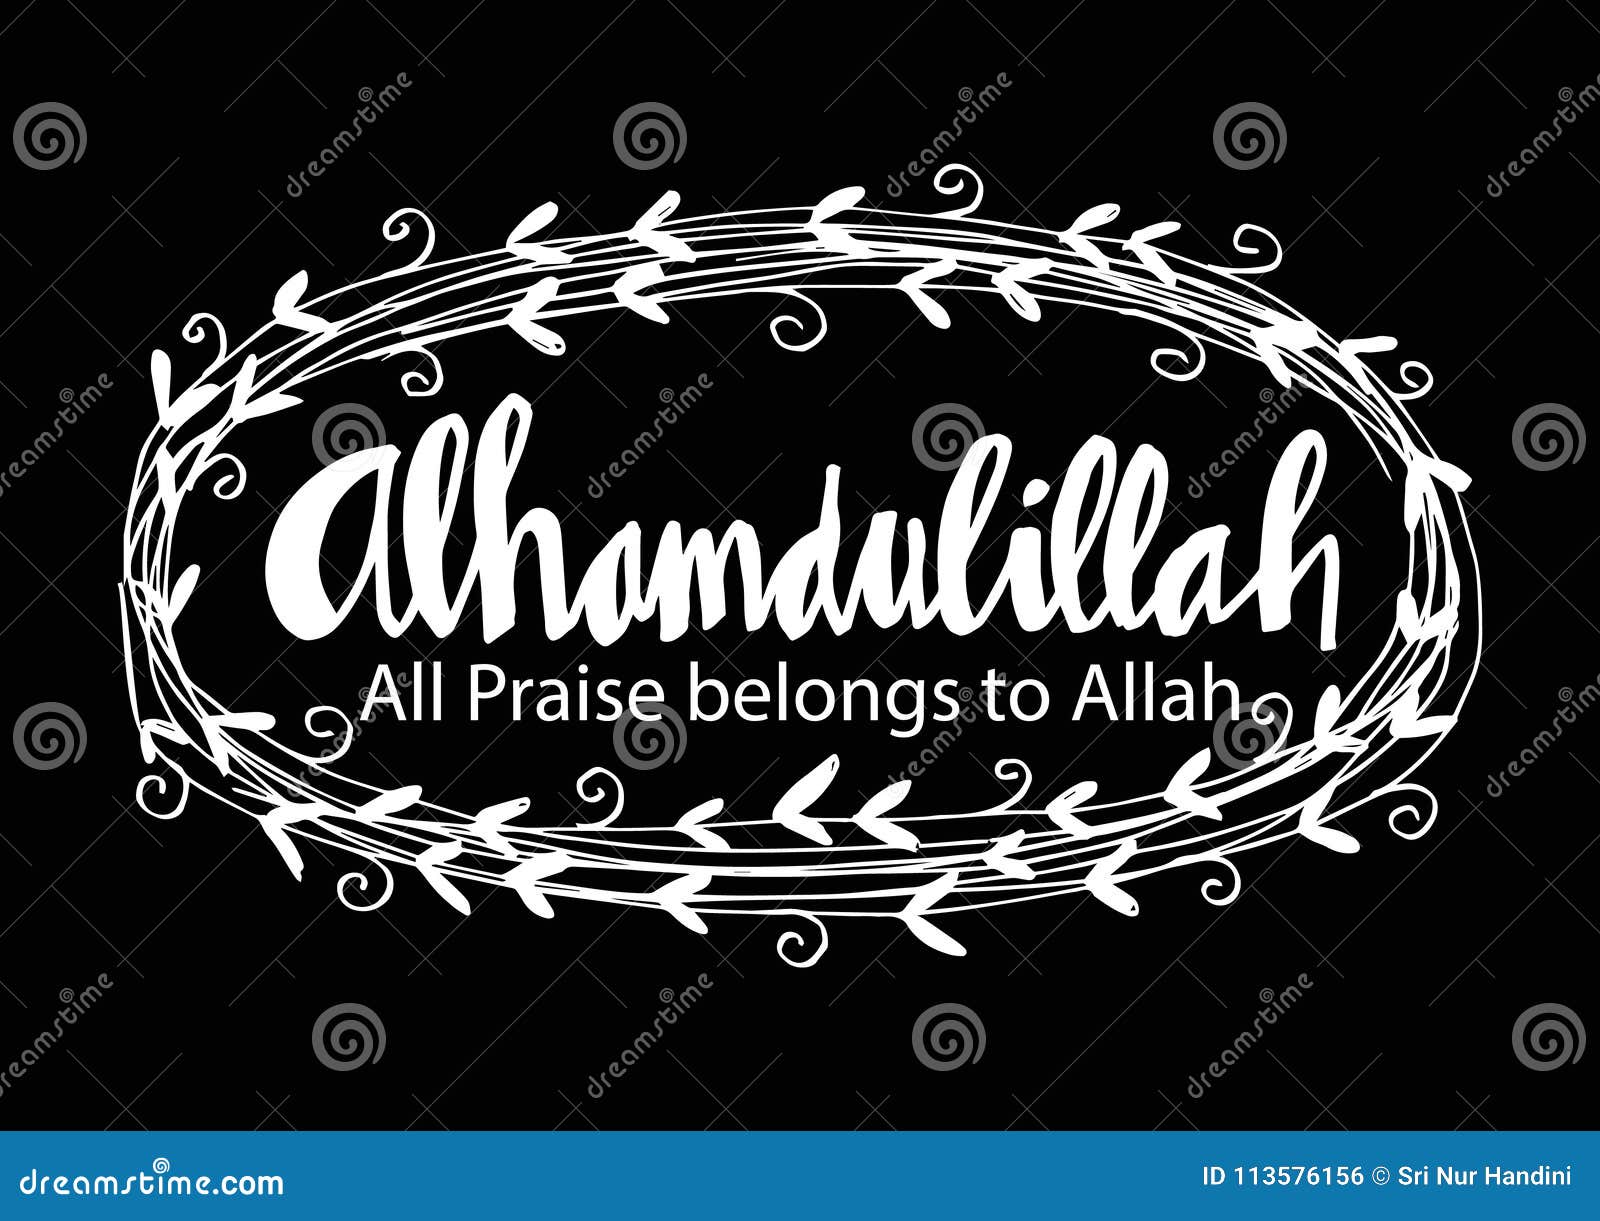 alhamdulillah praise belongs to allah hand lettering.